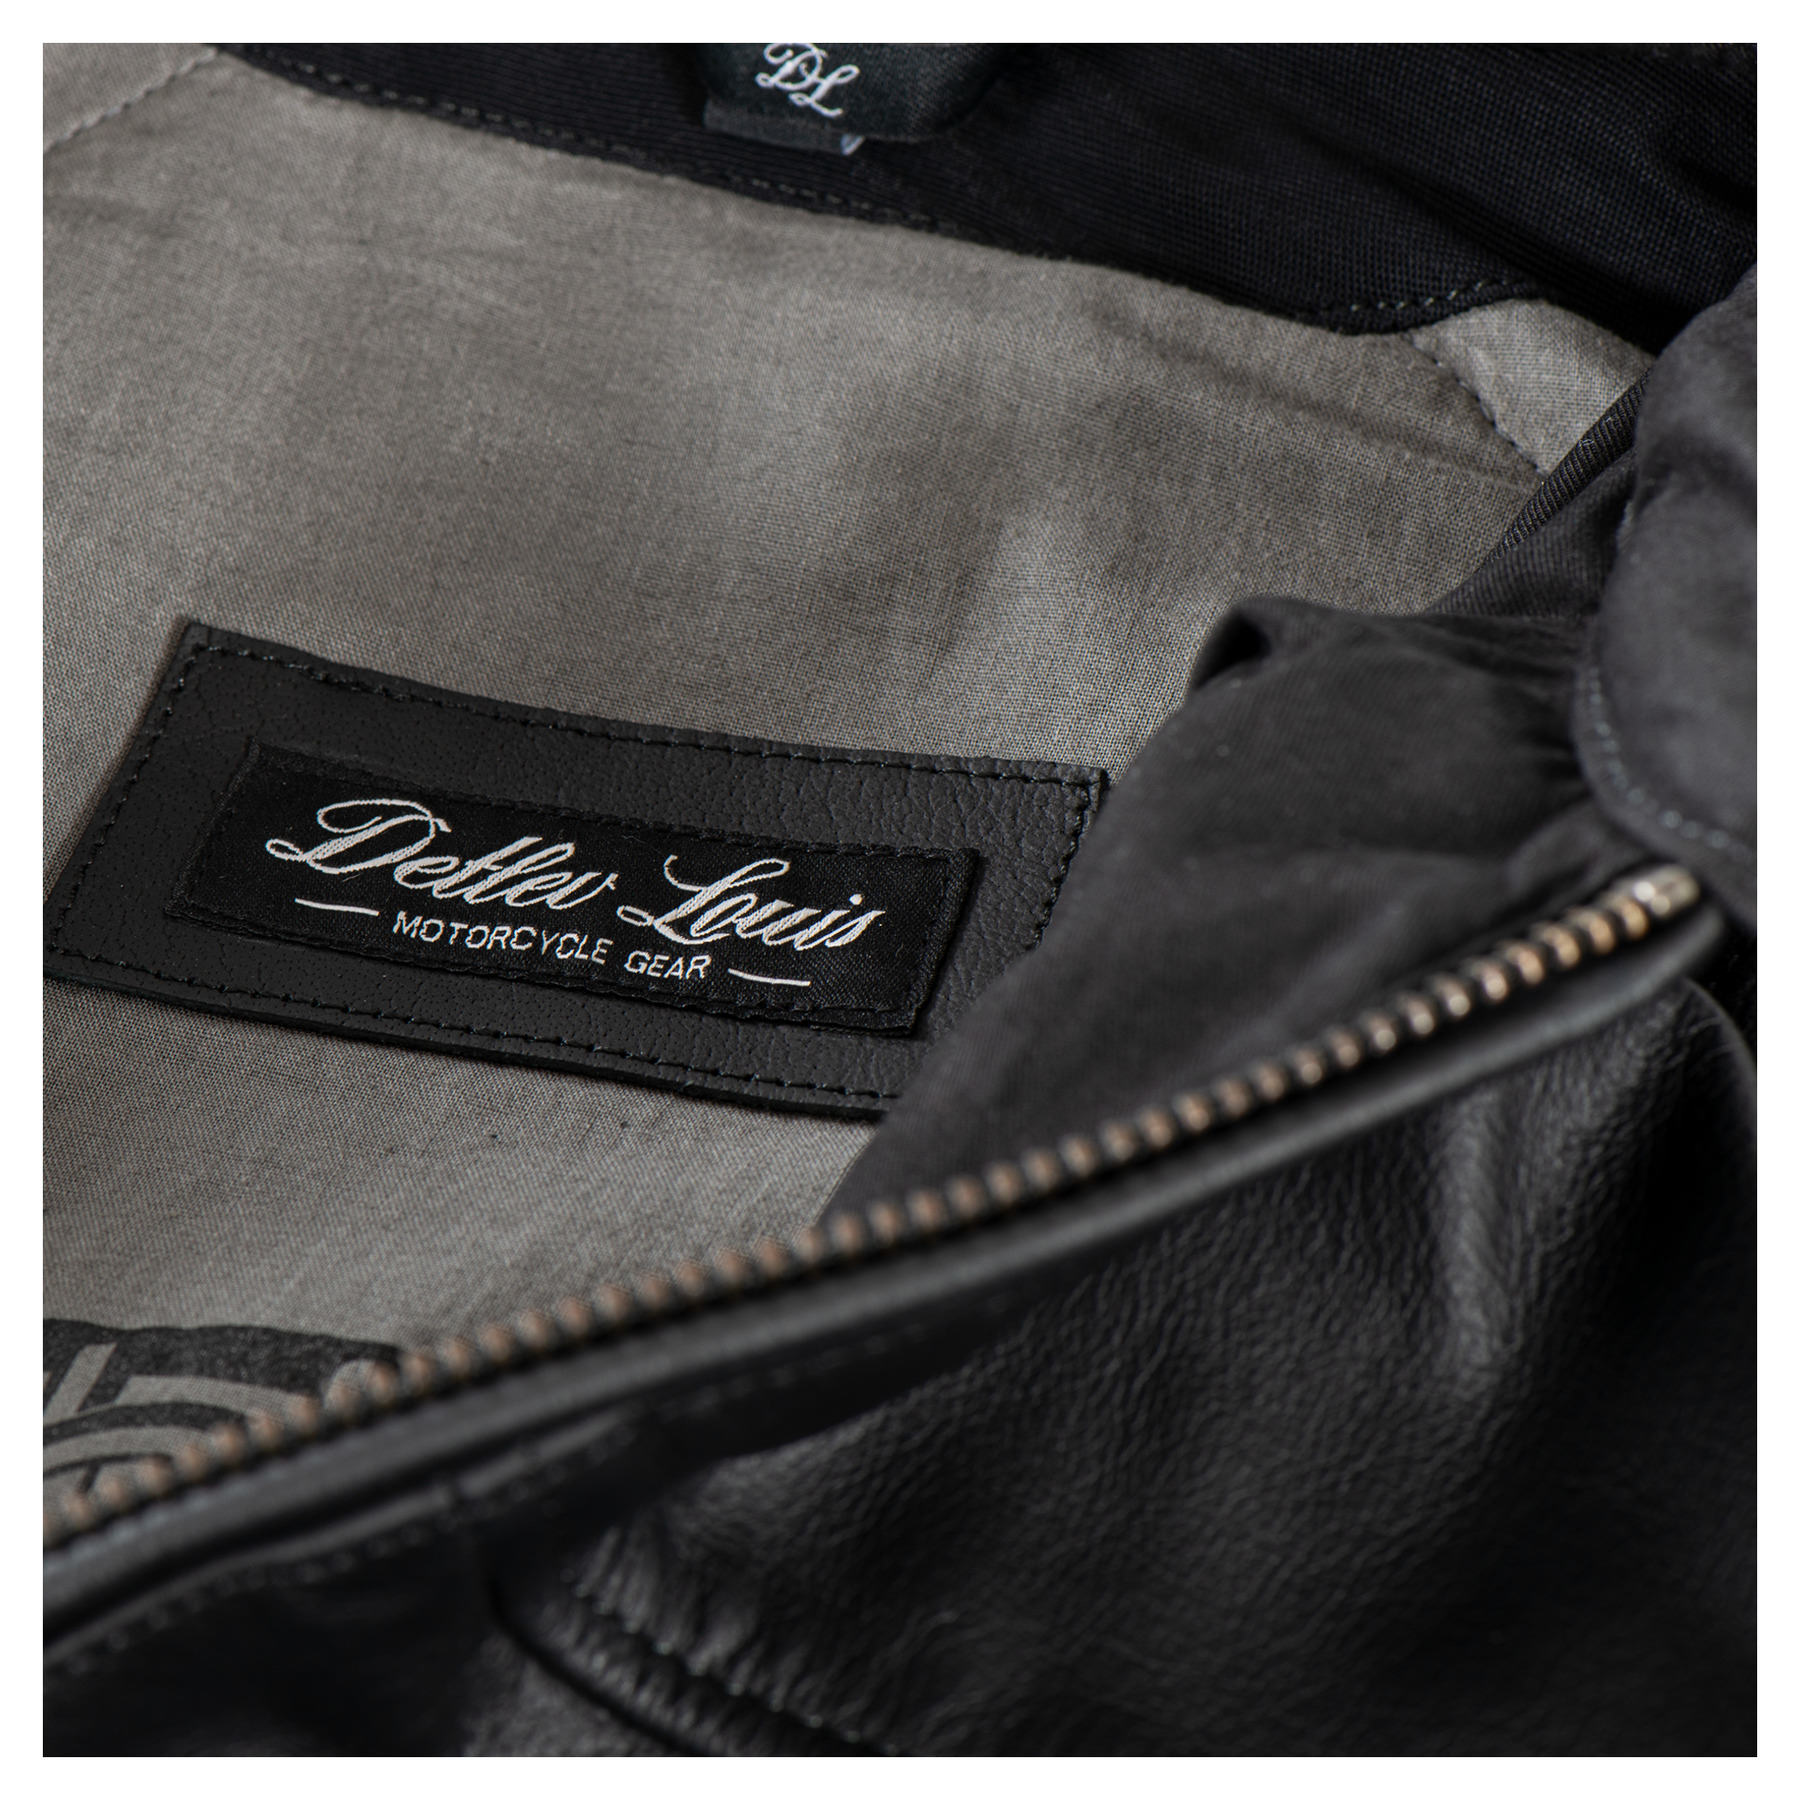 Detlev Louis Presents The Stylish DL-JM-12 Leather Jacket